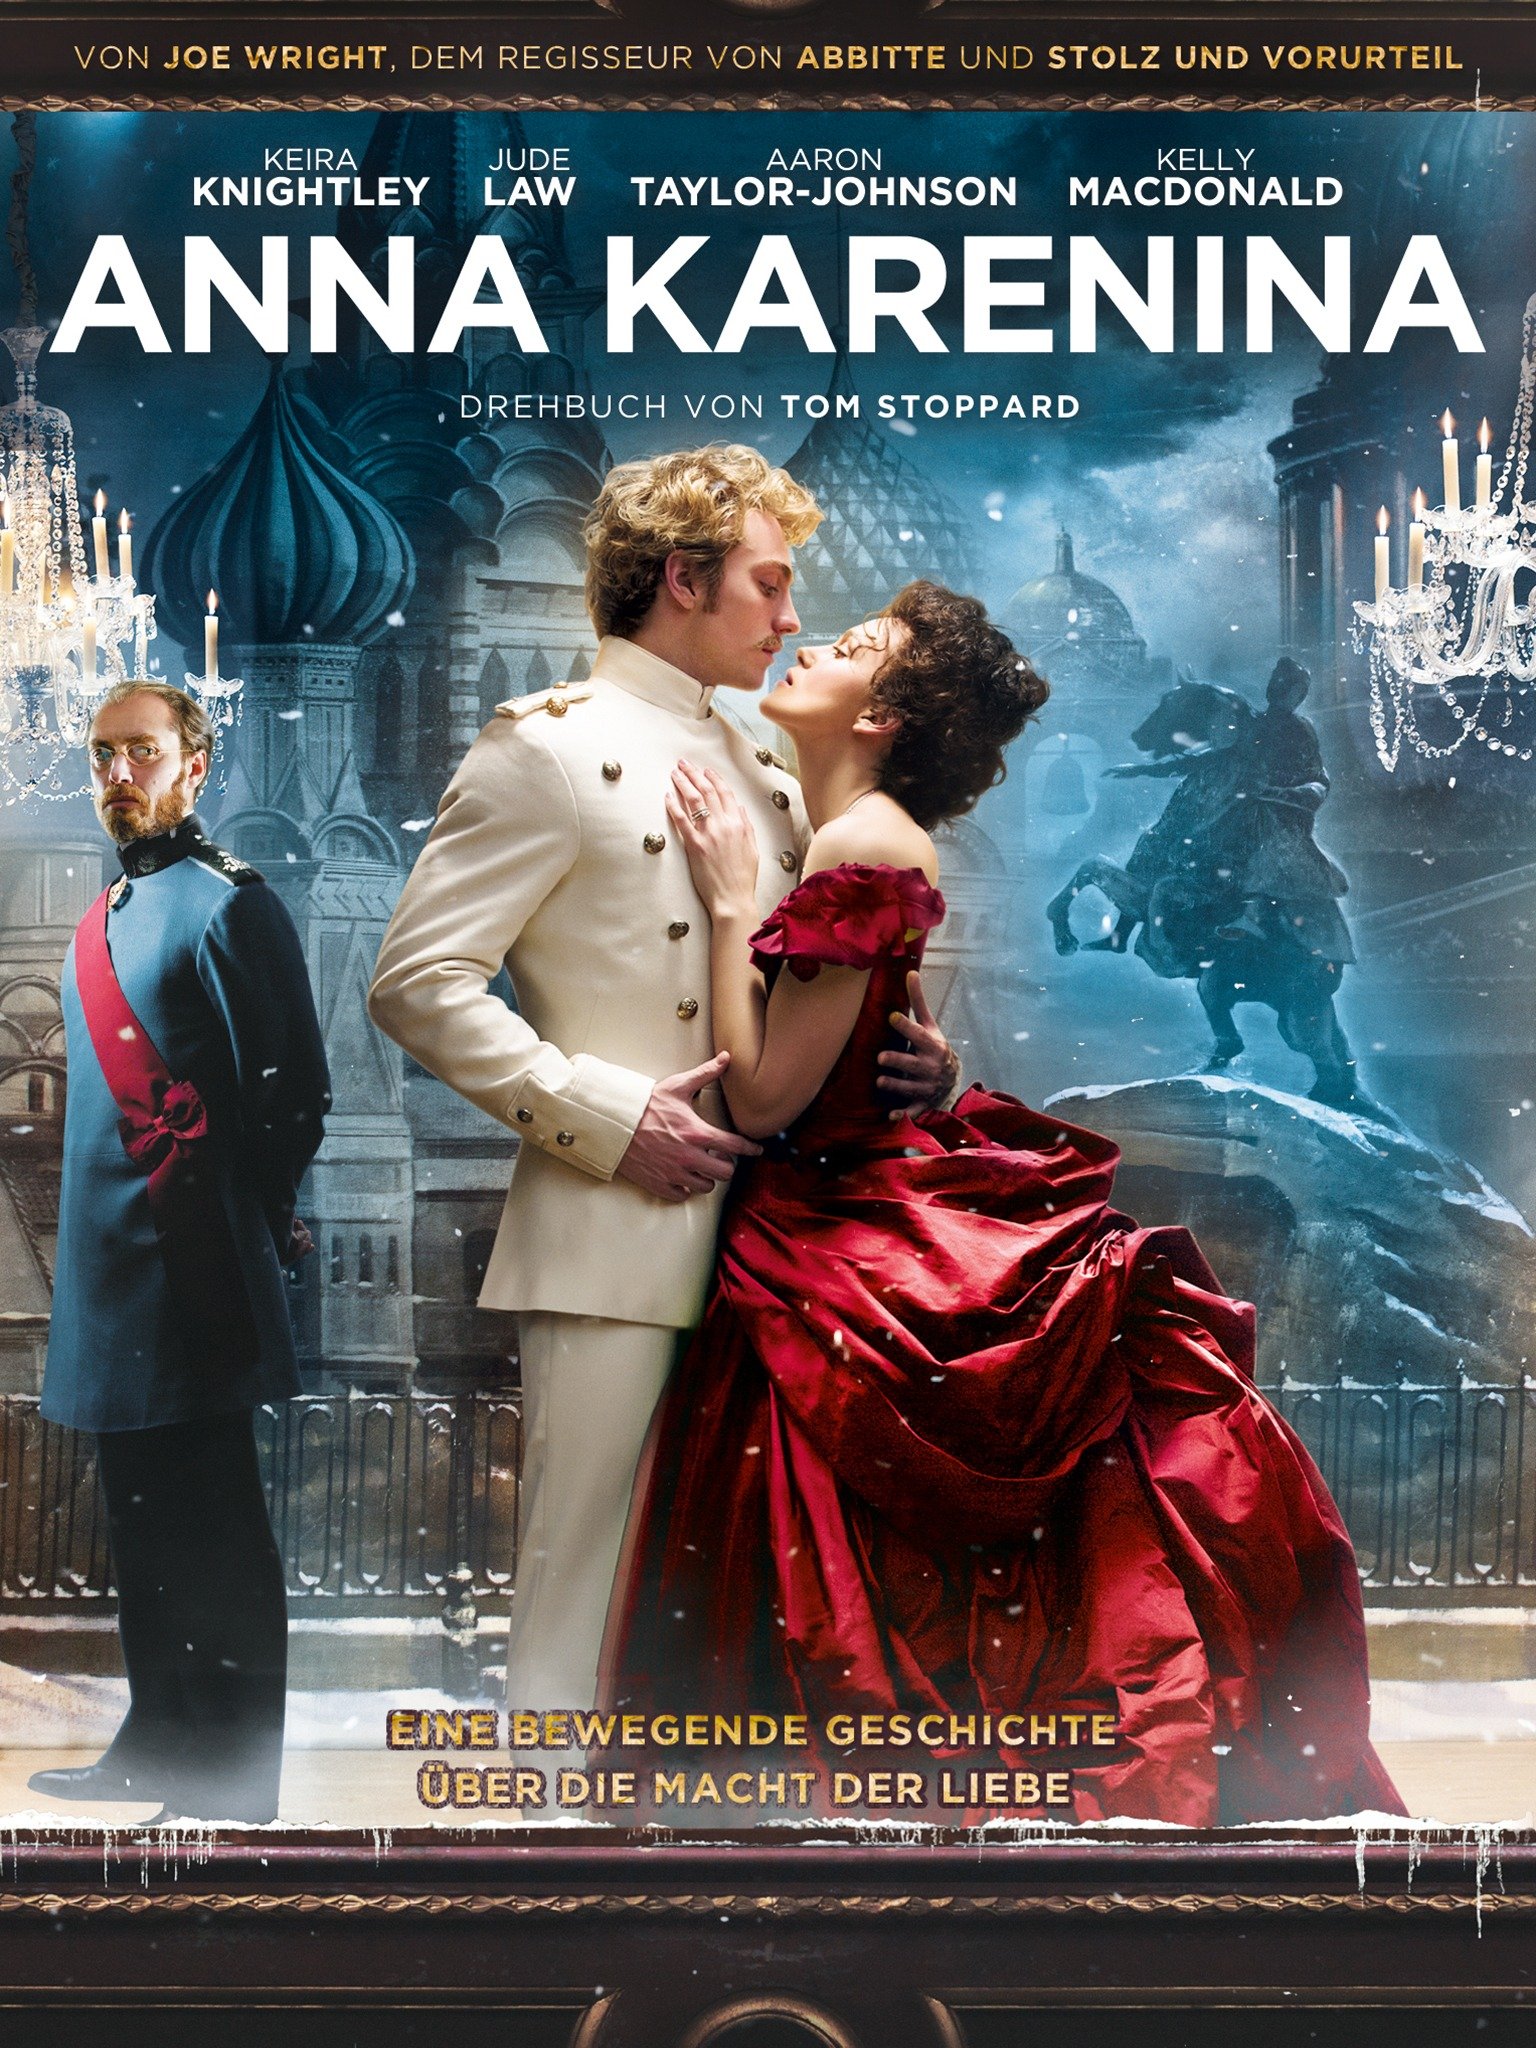 Anna Karenina download the last version for ios